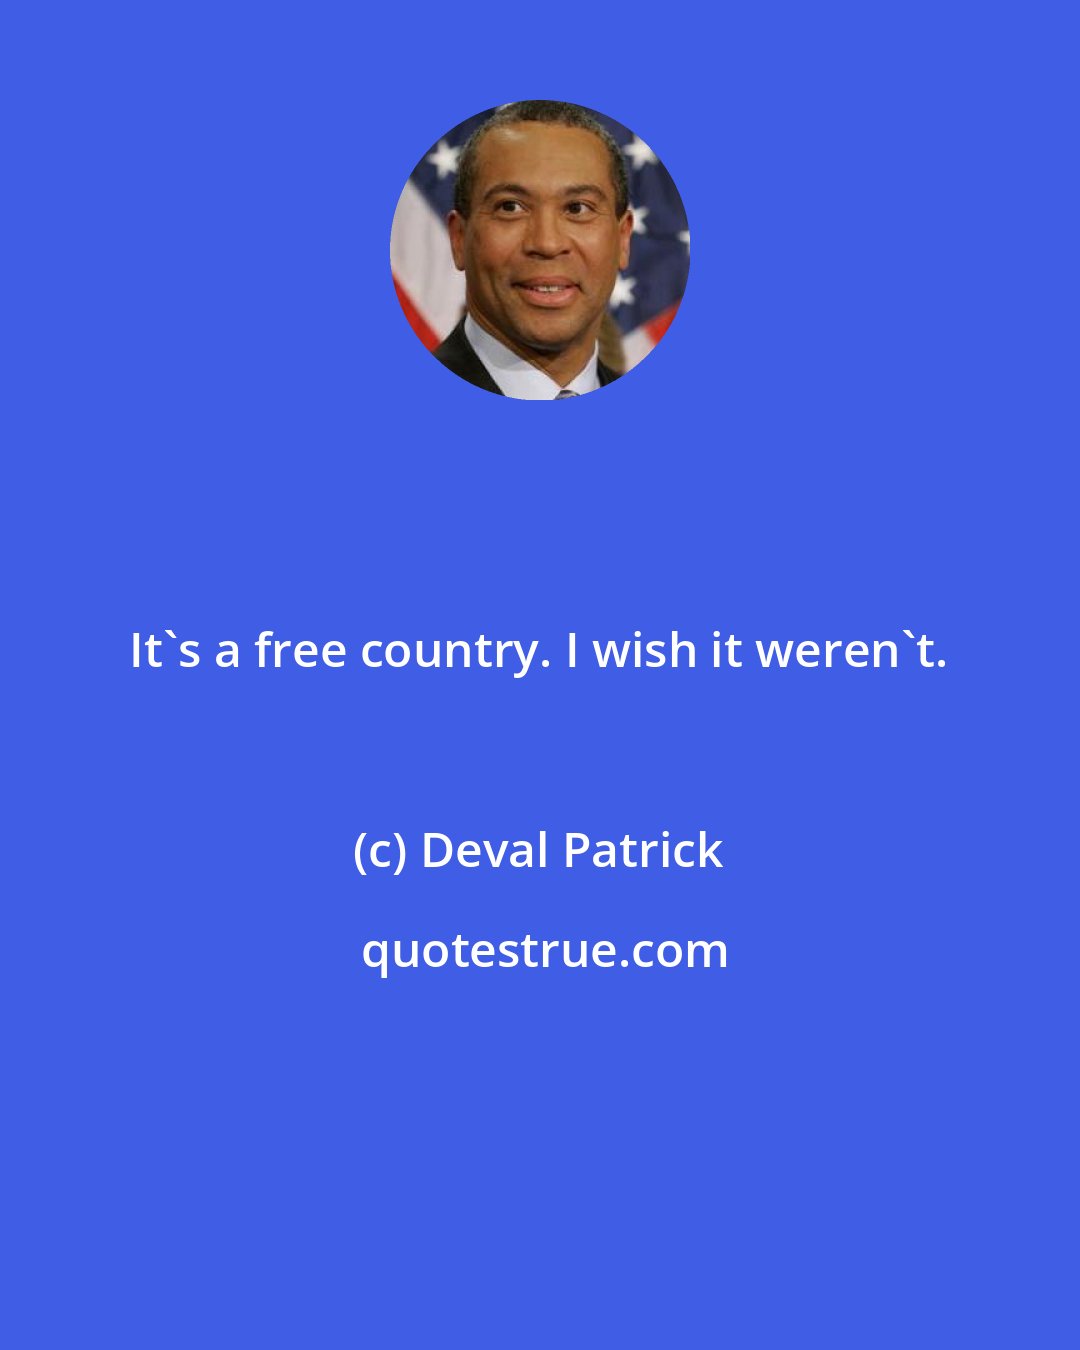 Deval Patrick: It's a free country. I wish it weren't.